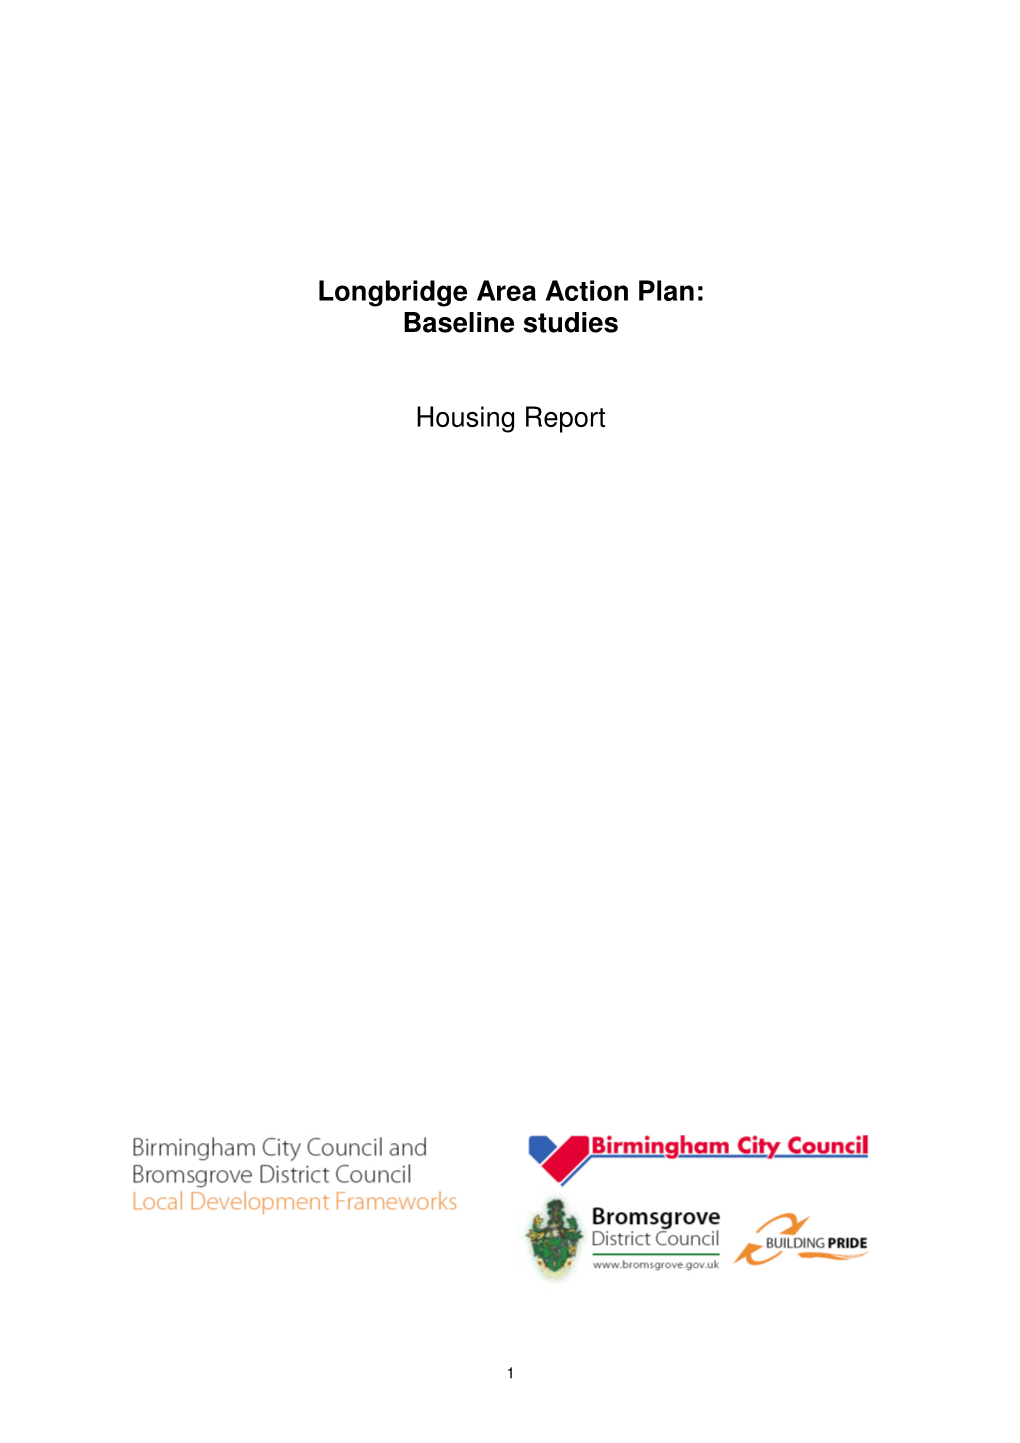 Longbridge Area Action Plan: Baseline Studies Housing Report